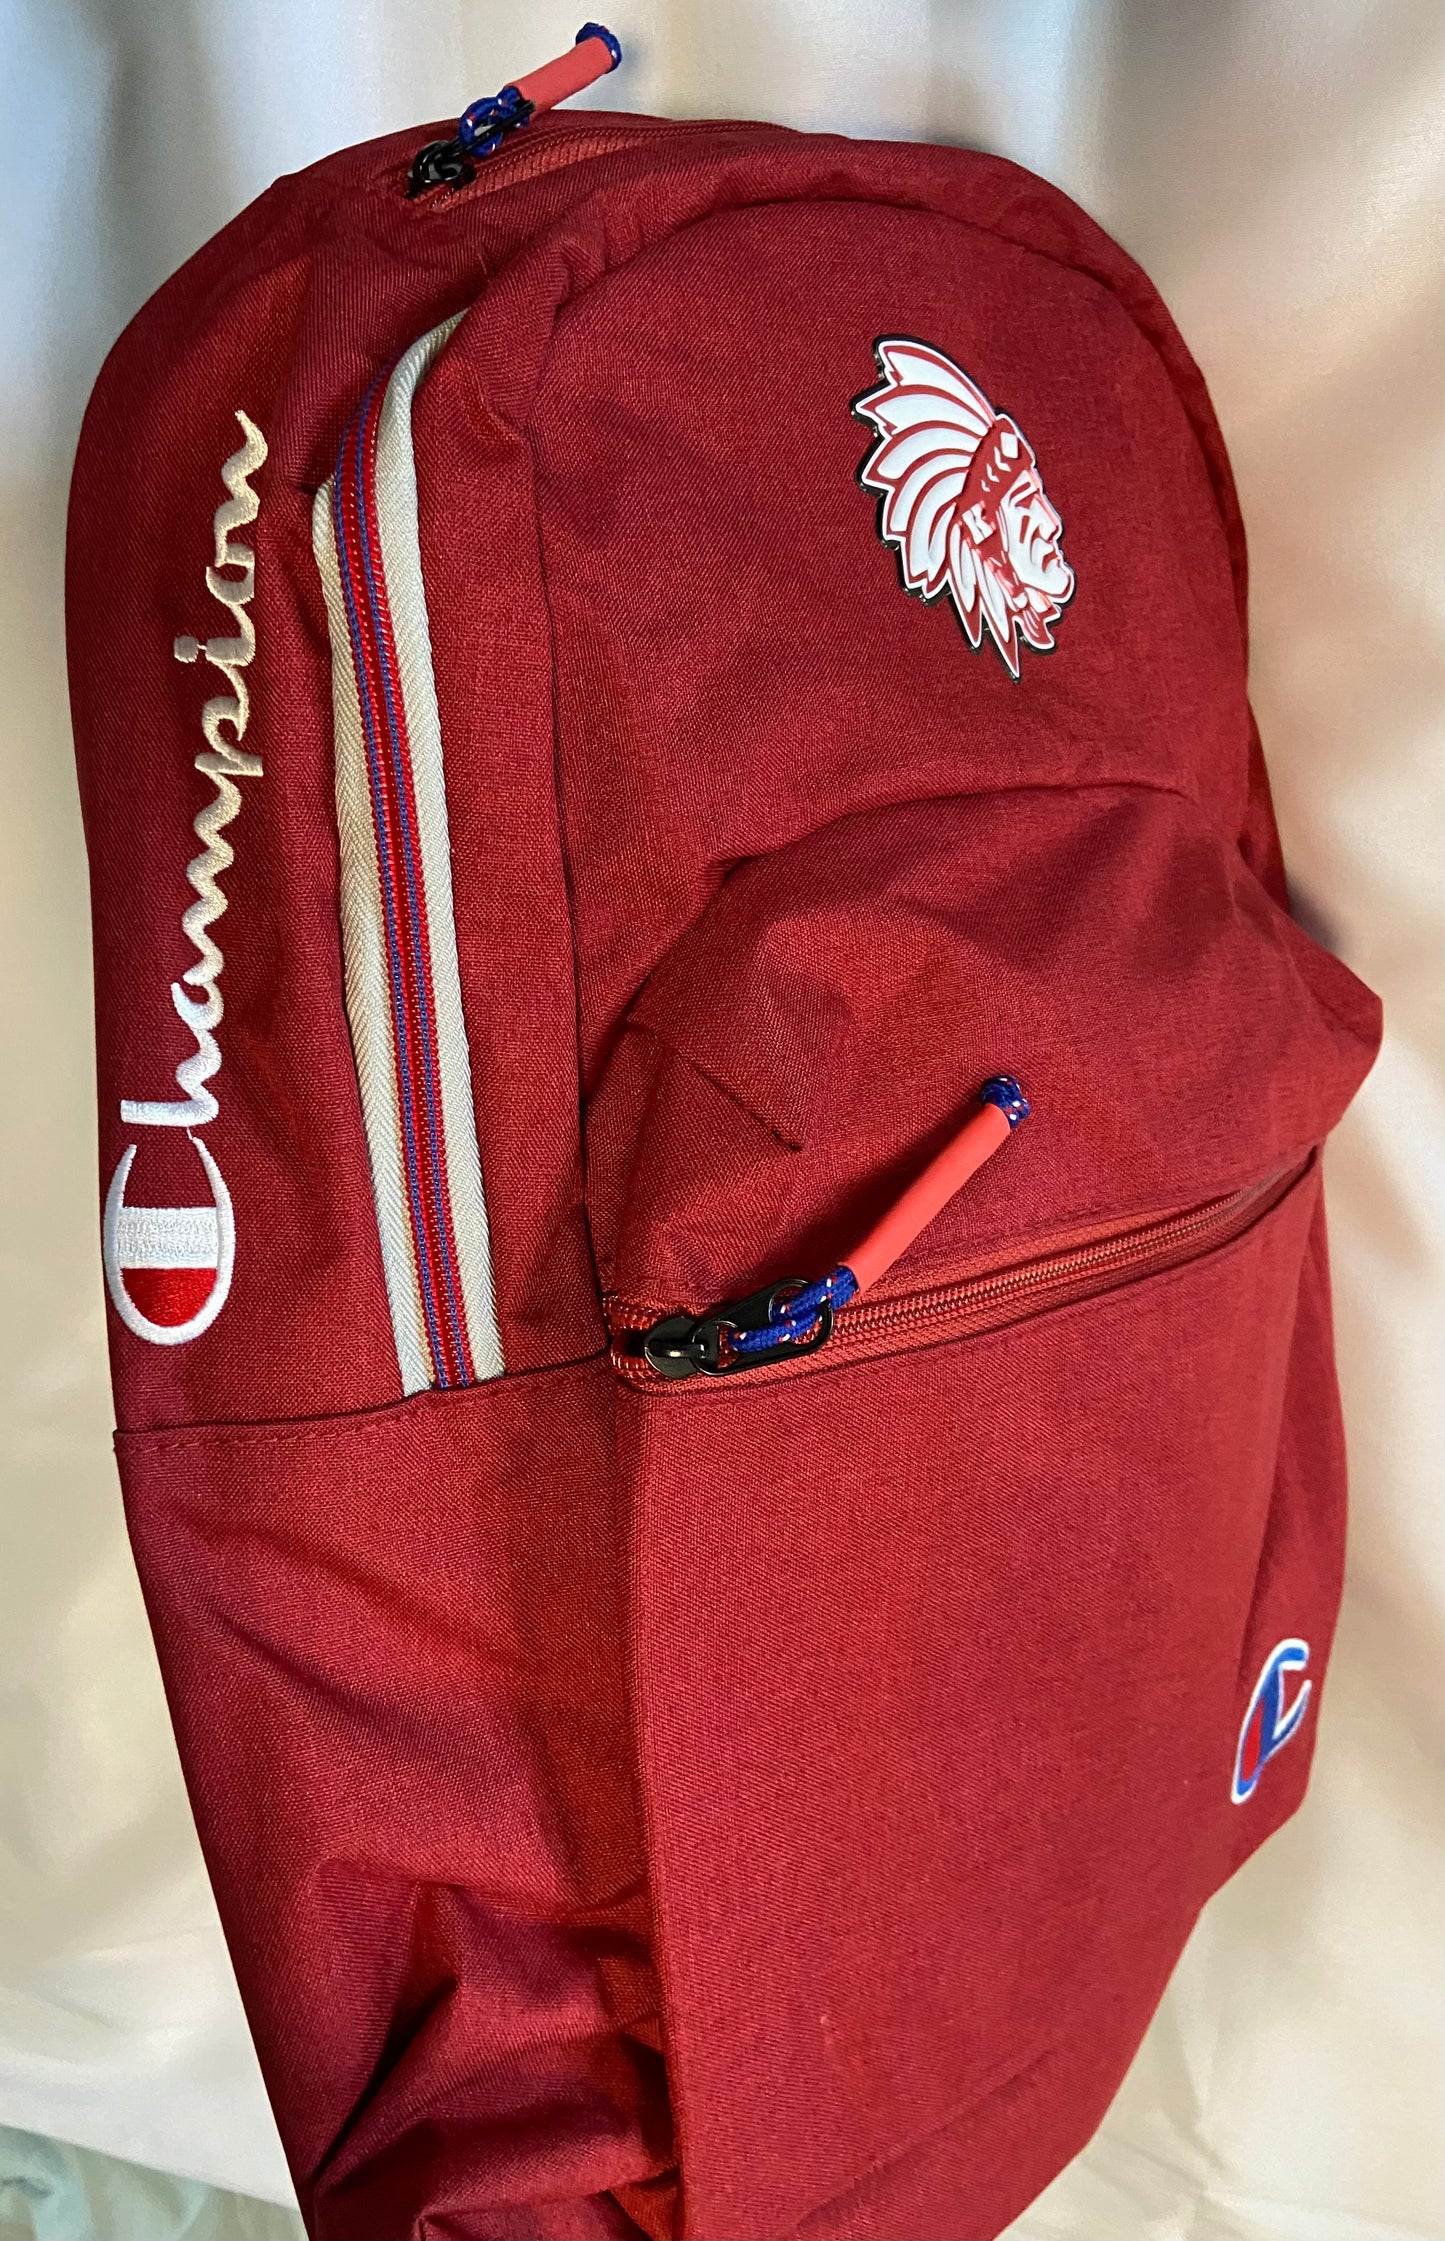 Knox Redskins Champion Laptop Bag Backpack - Padded Sleeve for 15" laptop